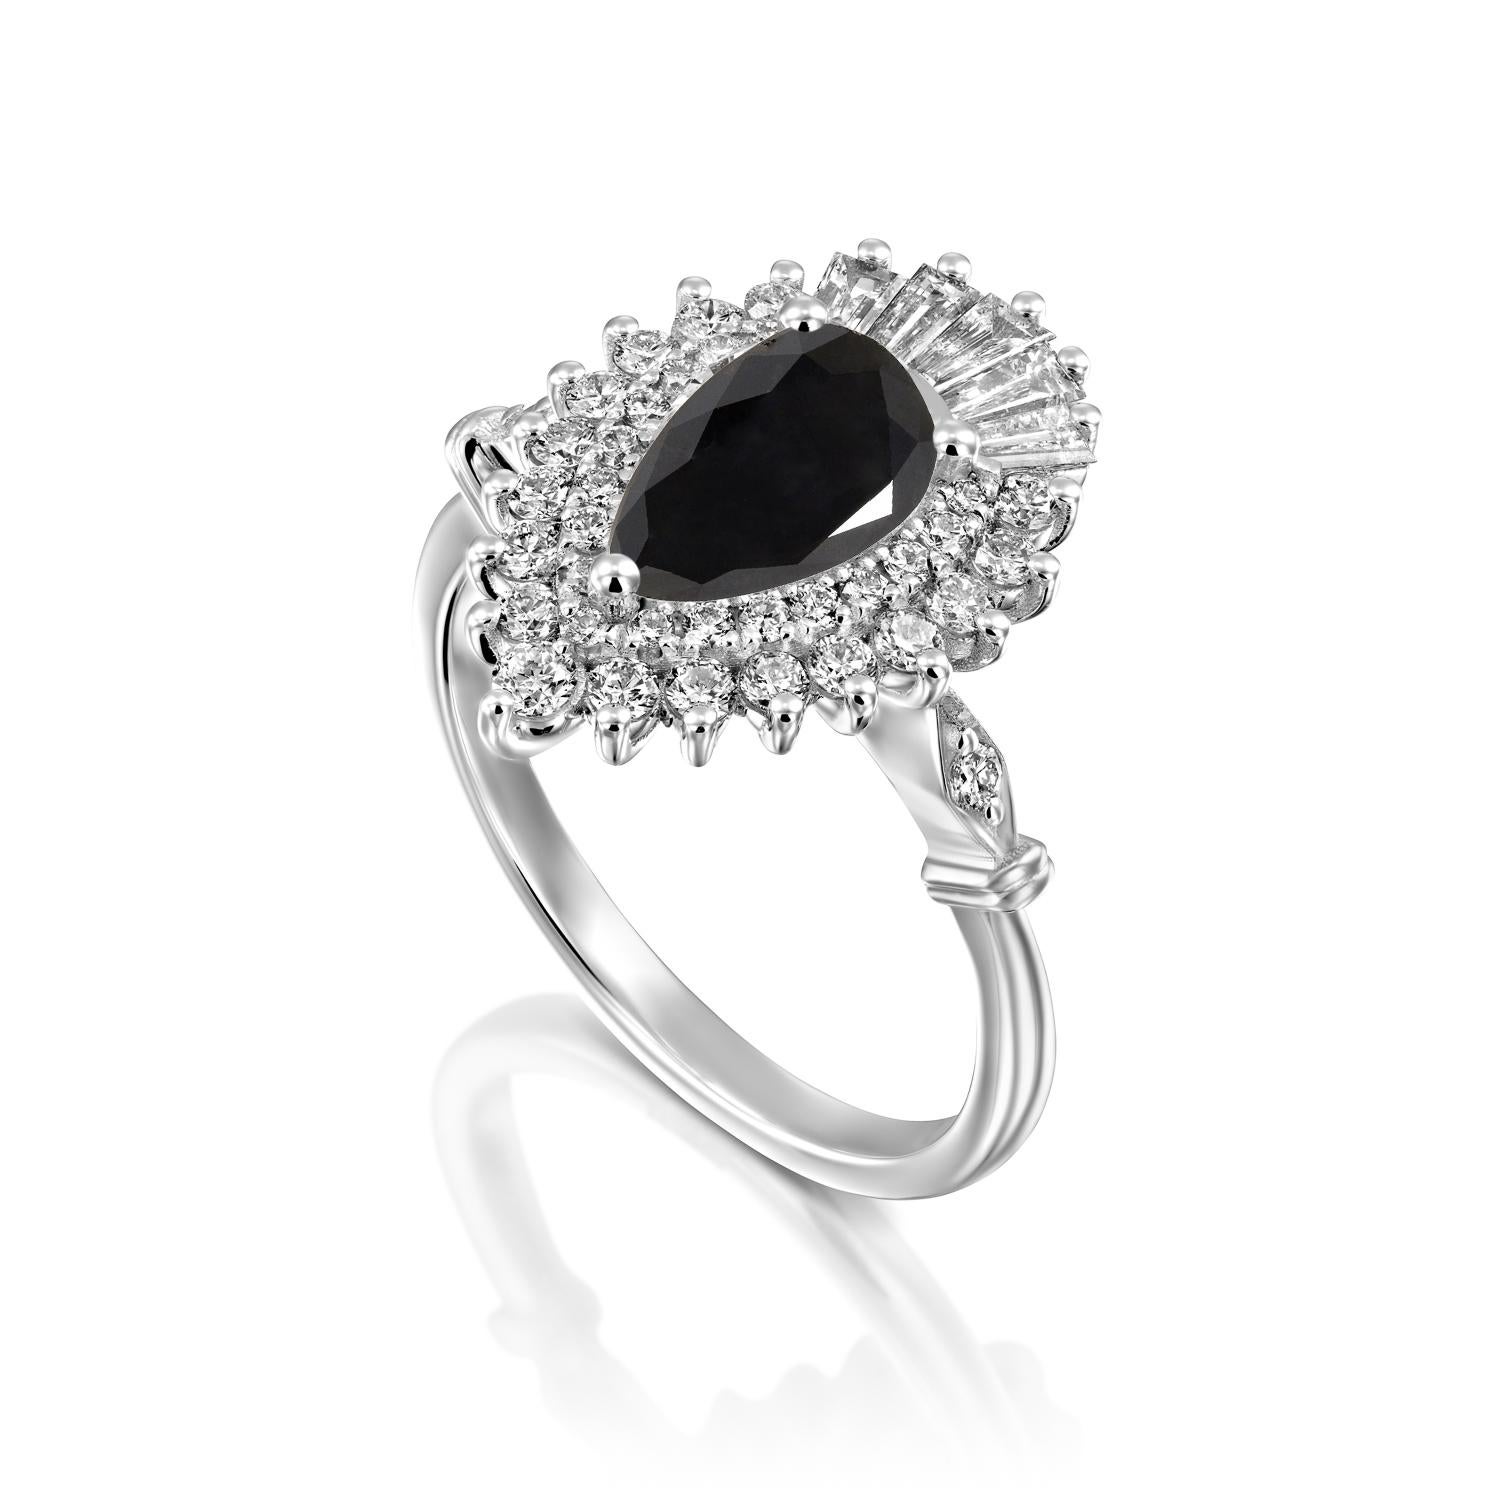 4 ct black diamond ring